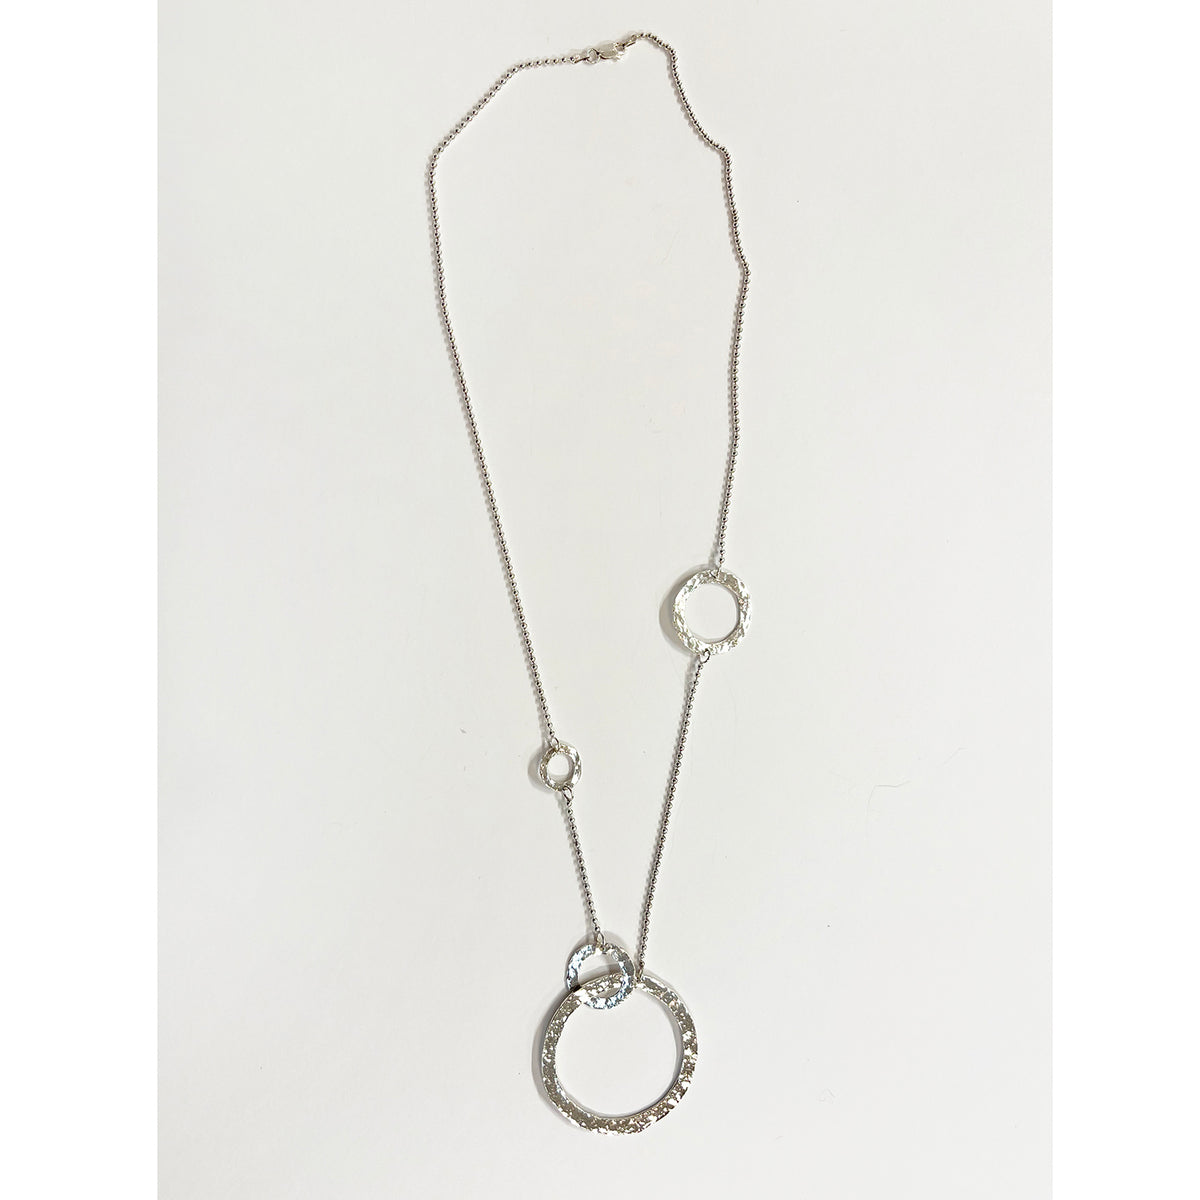 Gill Birol - Balance Necklace